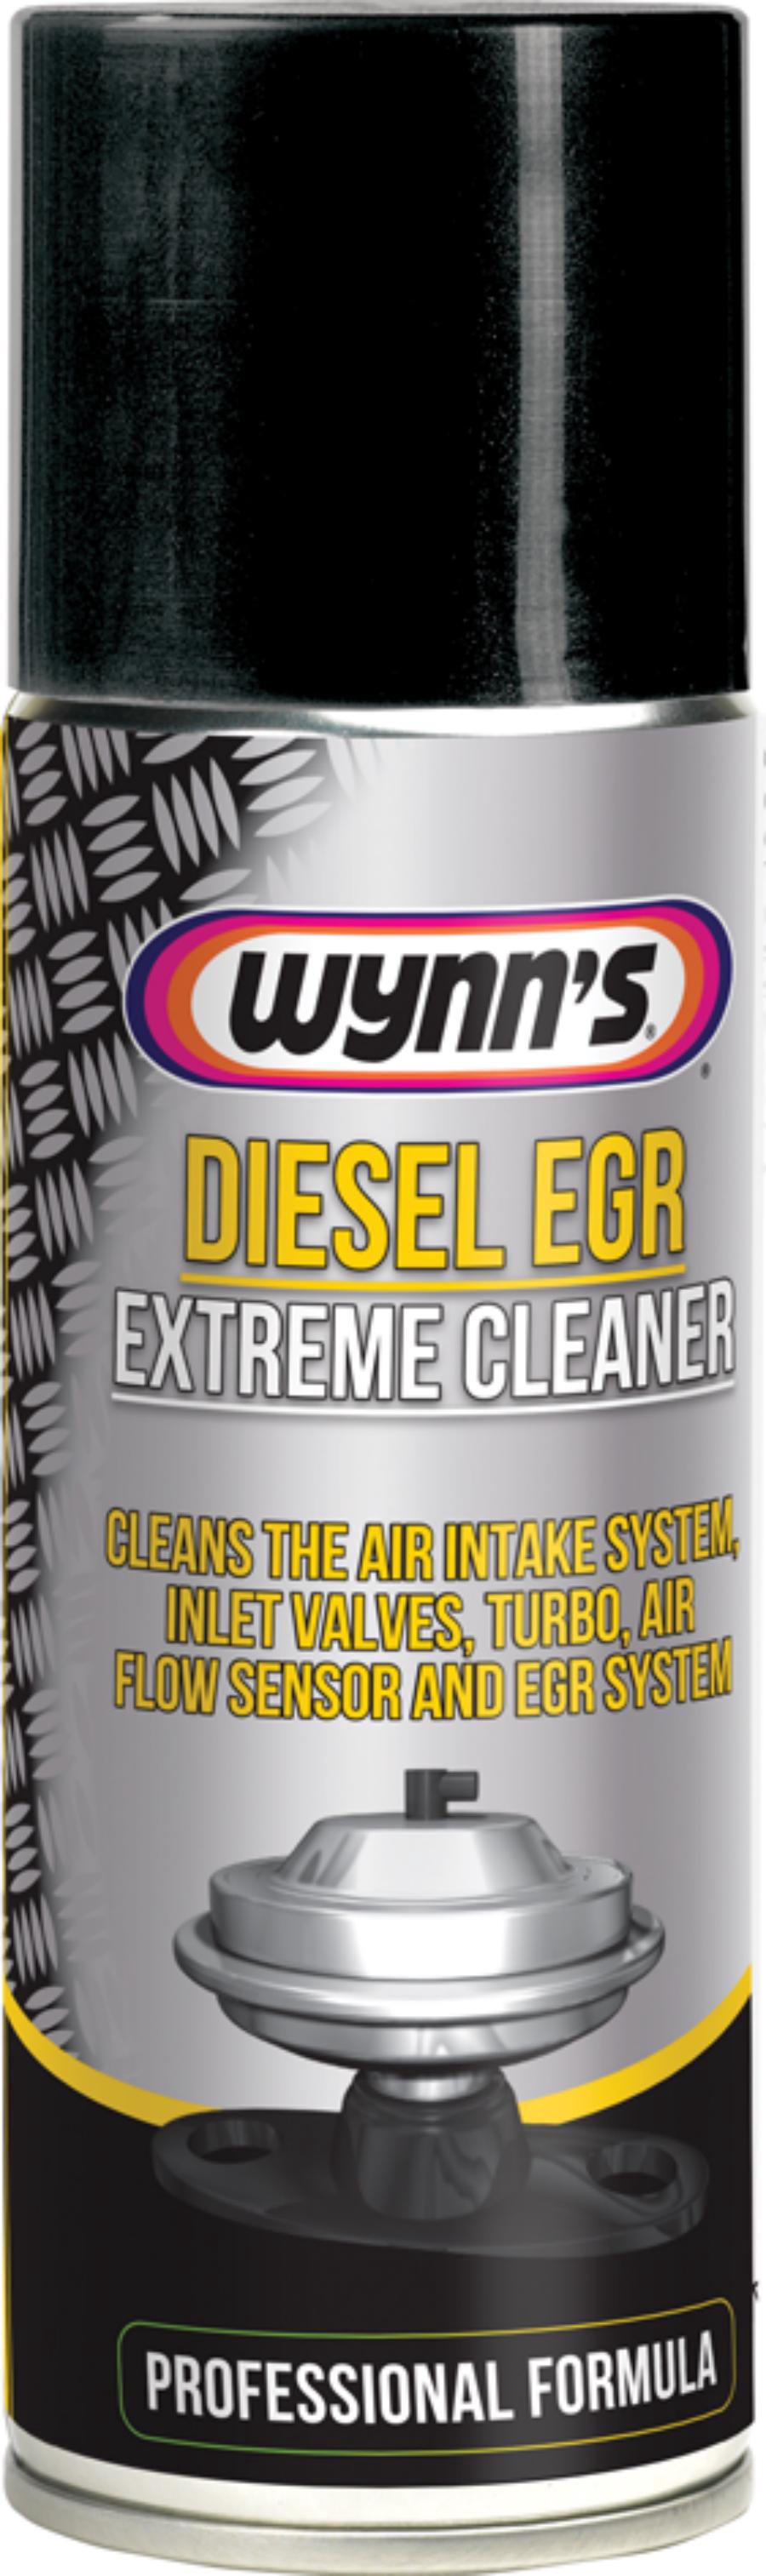 Wynn's Diesel EGR EXTREME CLEANER 200ml New